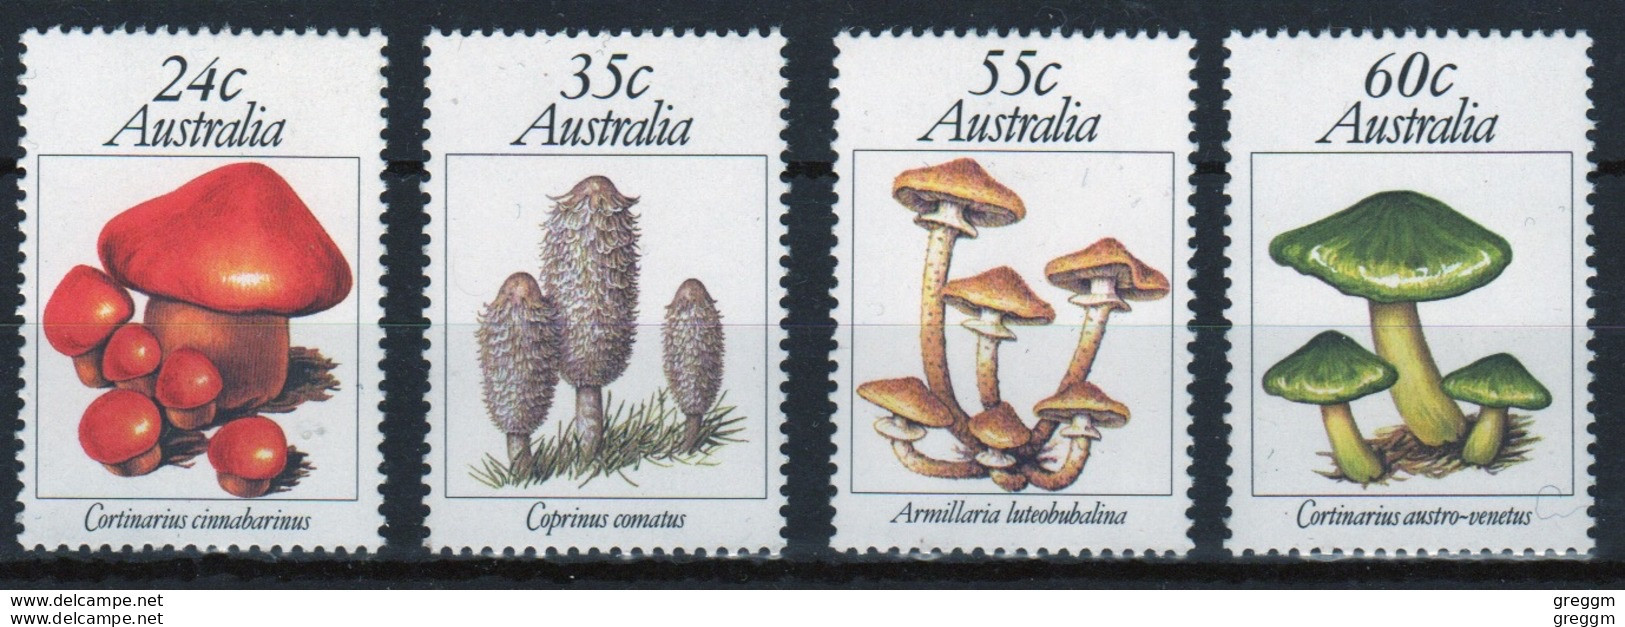 Australia 1981 Set Of Stamps To Celebrate Australian Fungi. - Mint Stamps